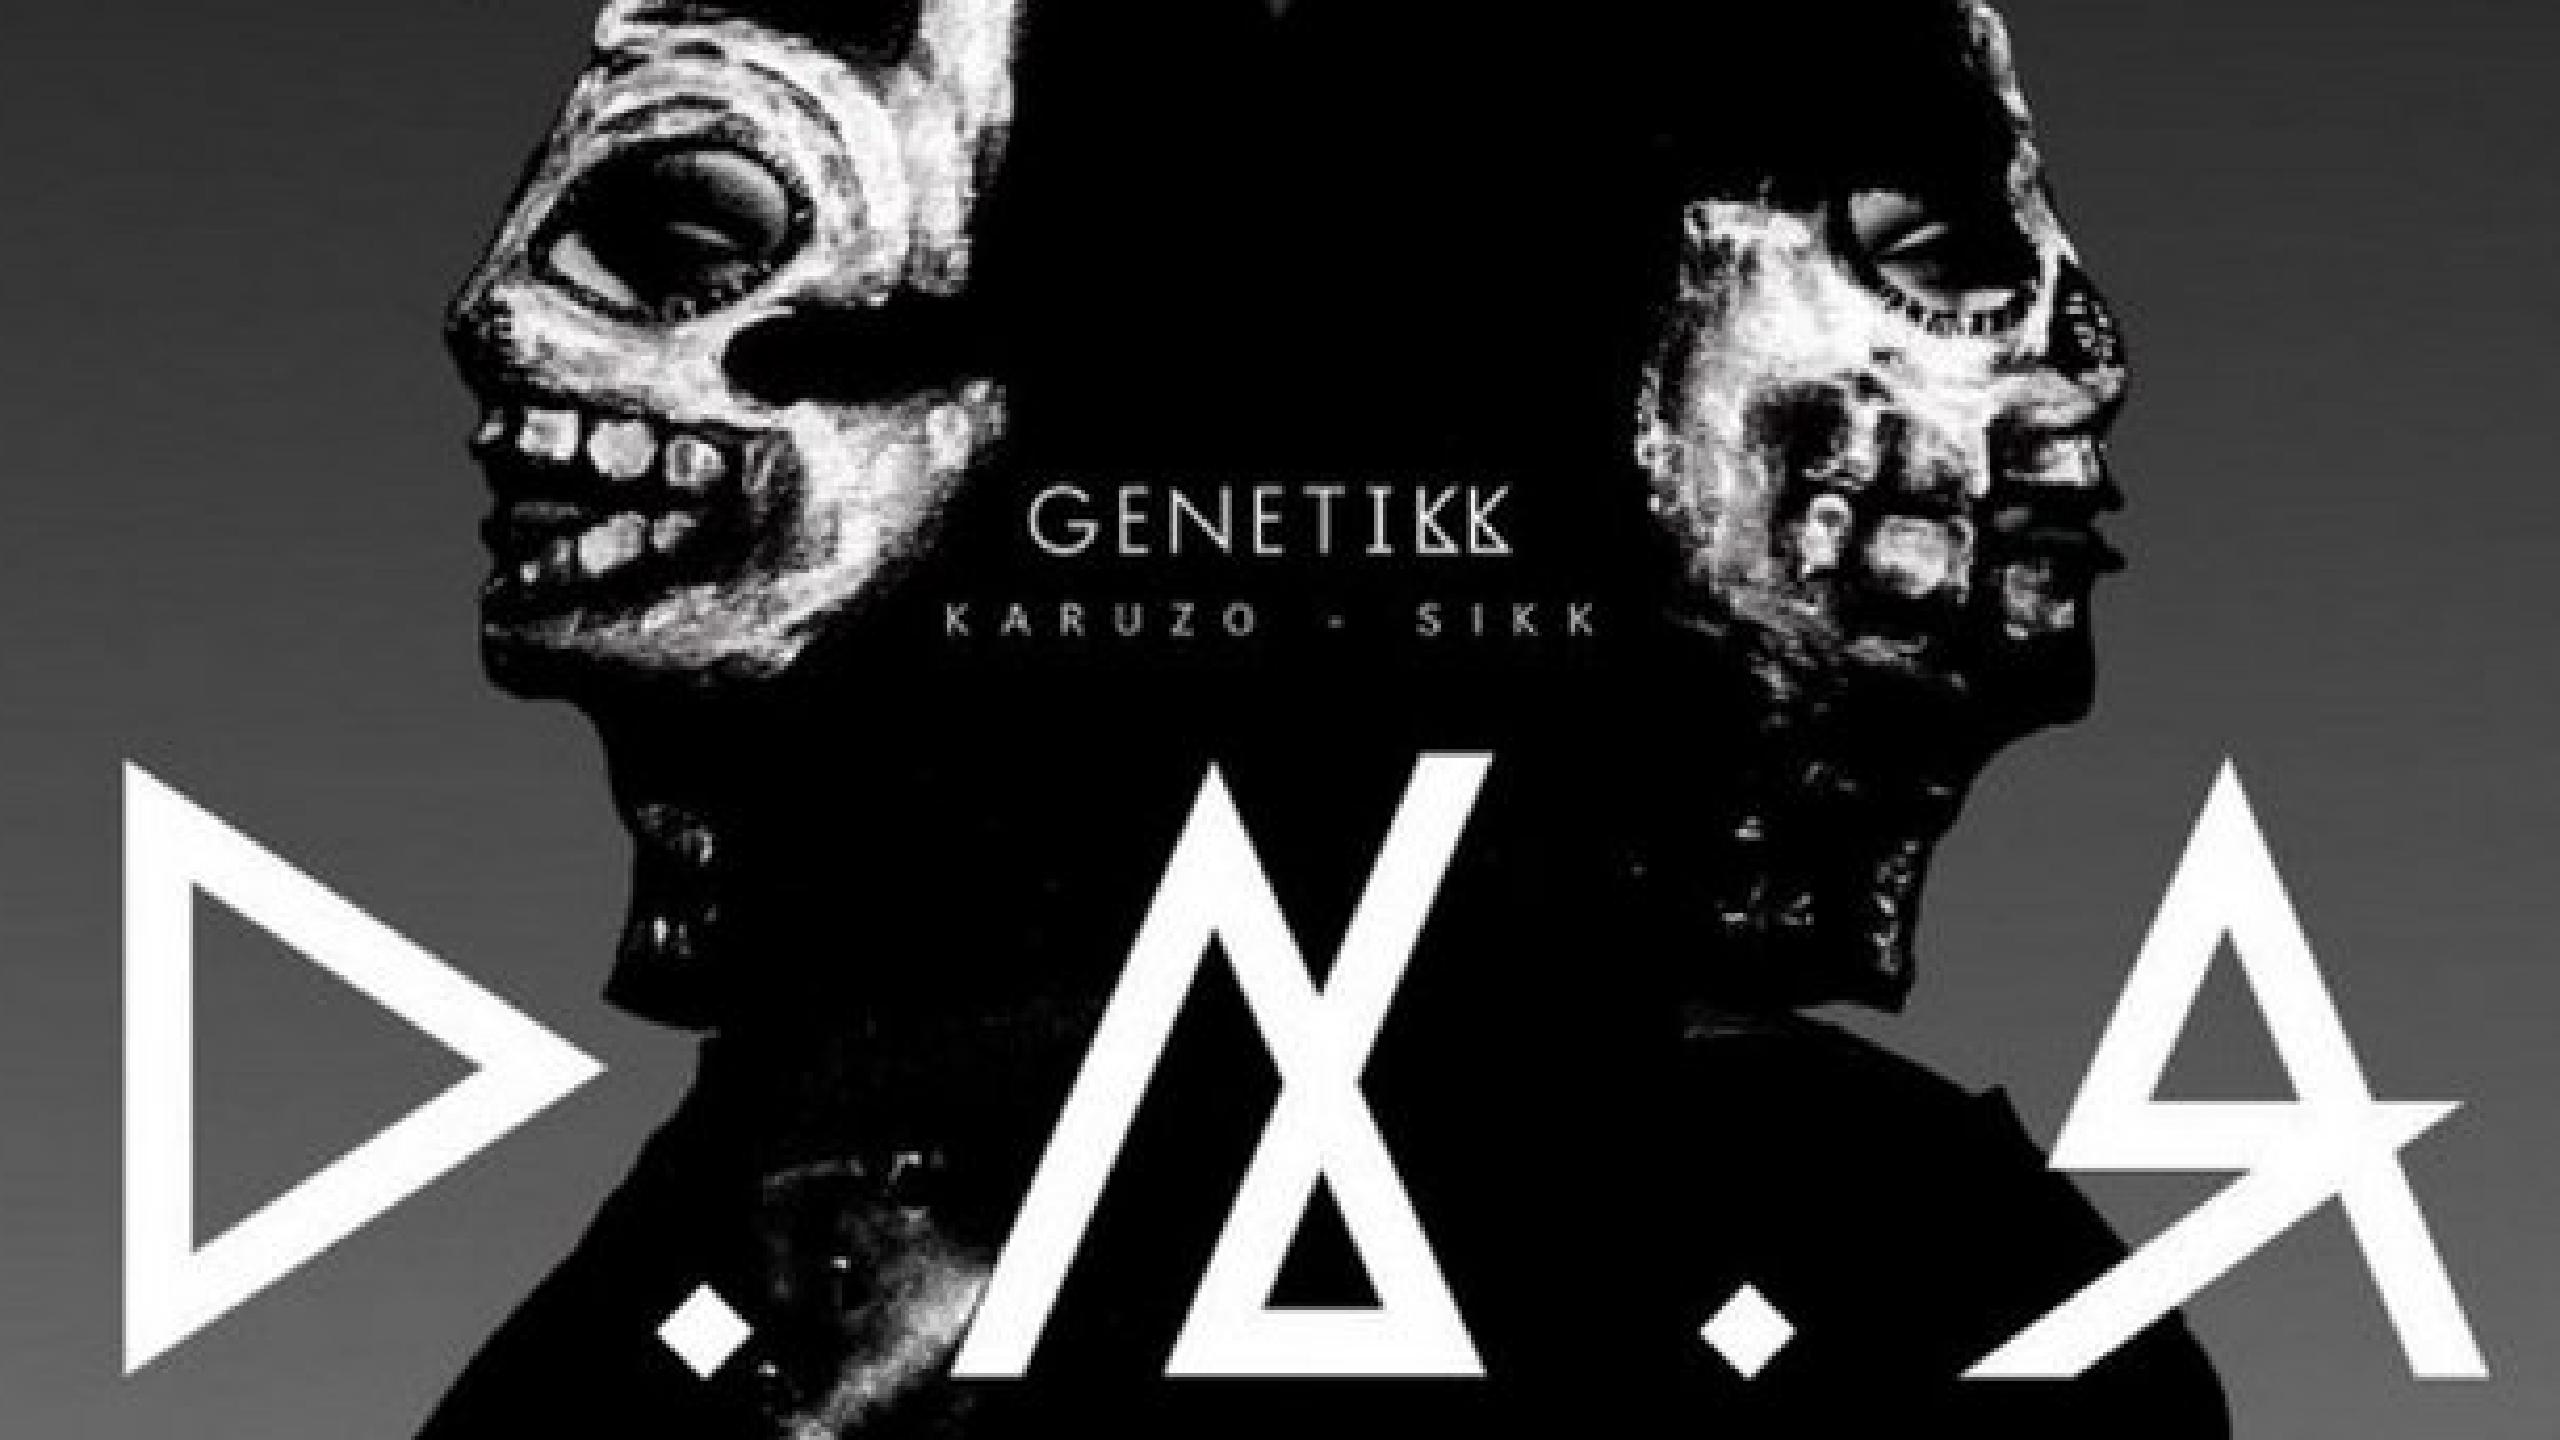 Genetikk Tour Dates 2019 - Genetikk Dna Album , HD Wallpaper & Backgrounds